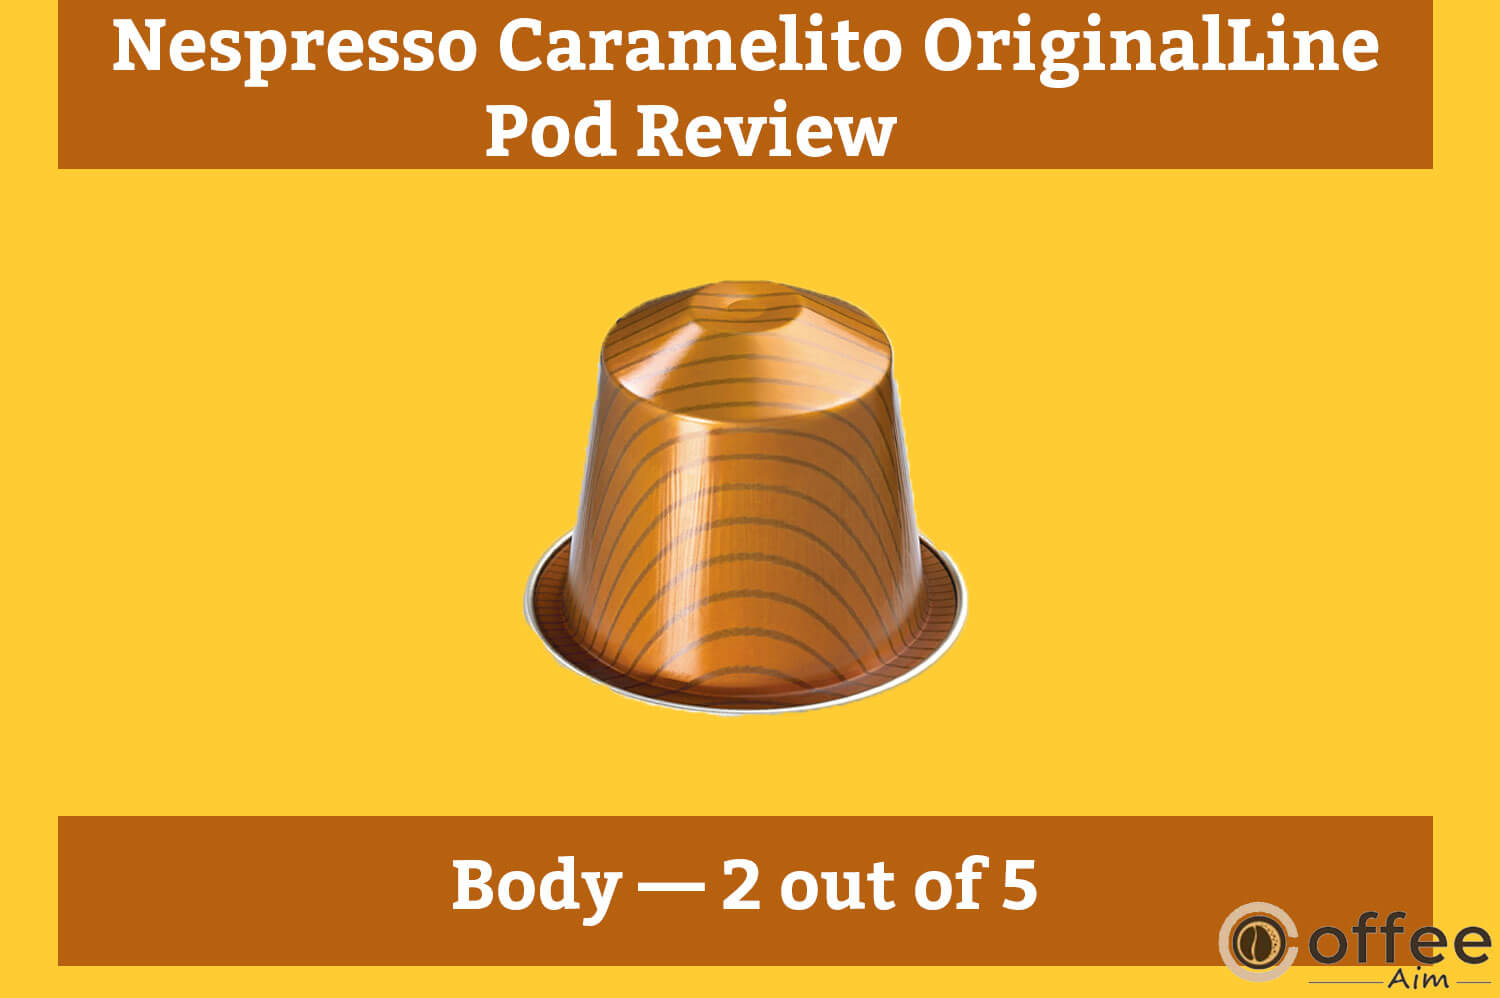 The image depicts the "Nespresso Caramelito OriginalLine Pod" body, central to the review "Nespresso Caramelito OriginalLine Pod Review."